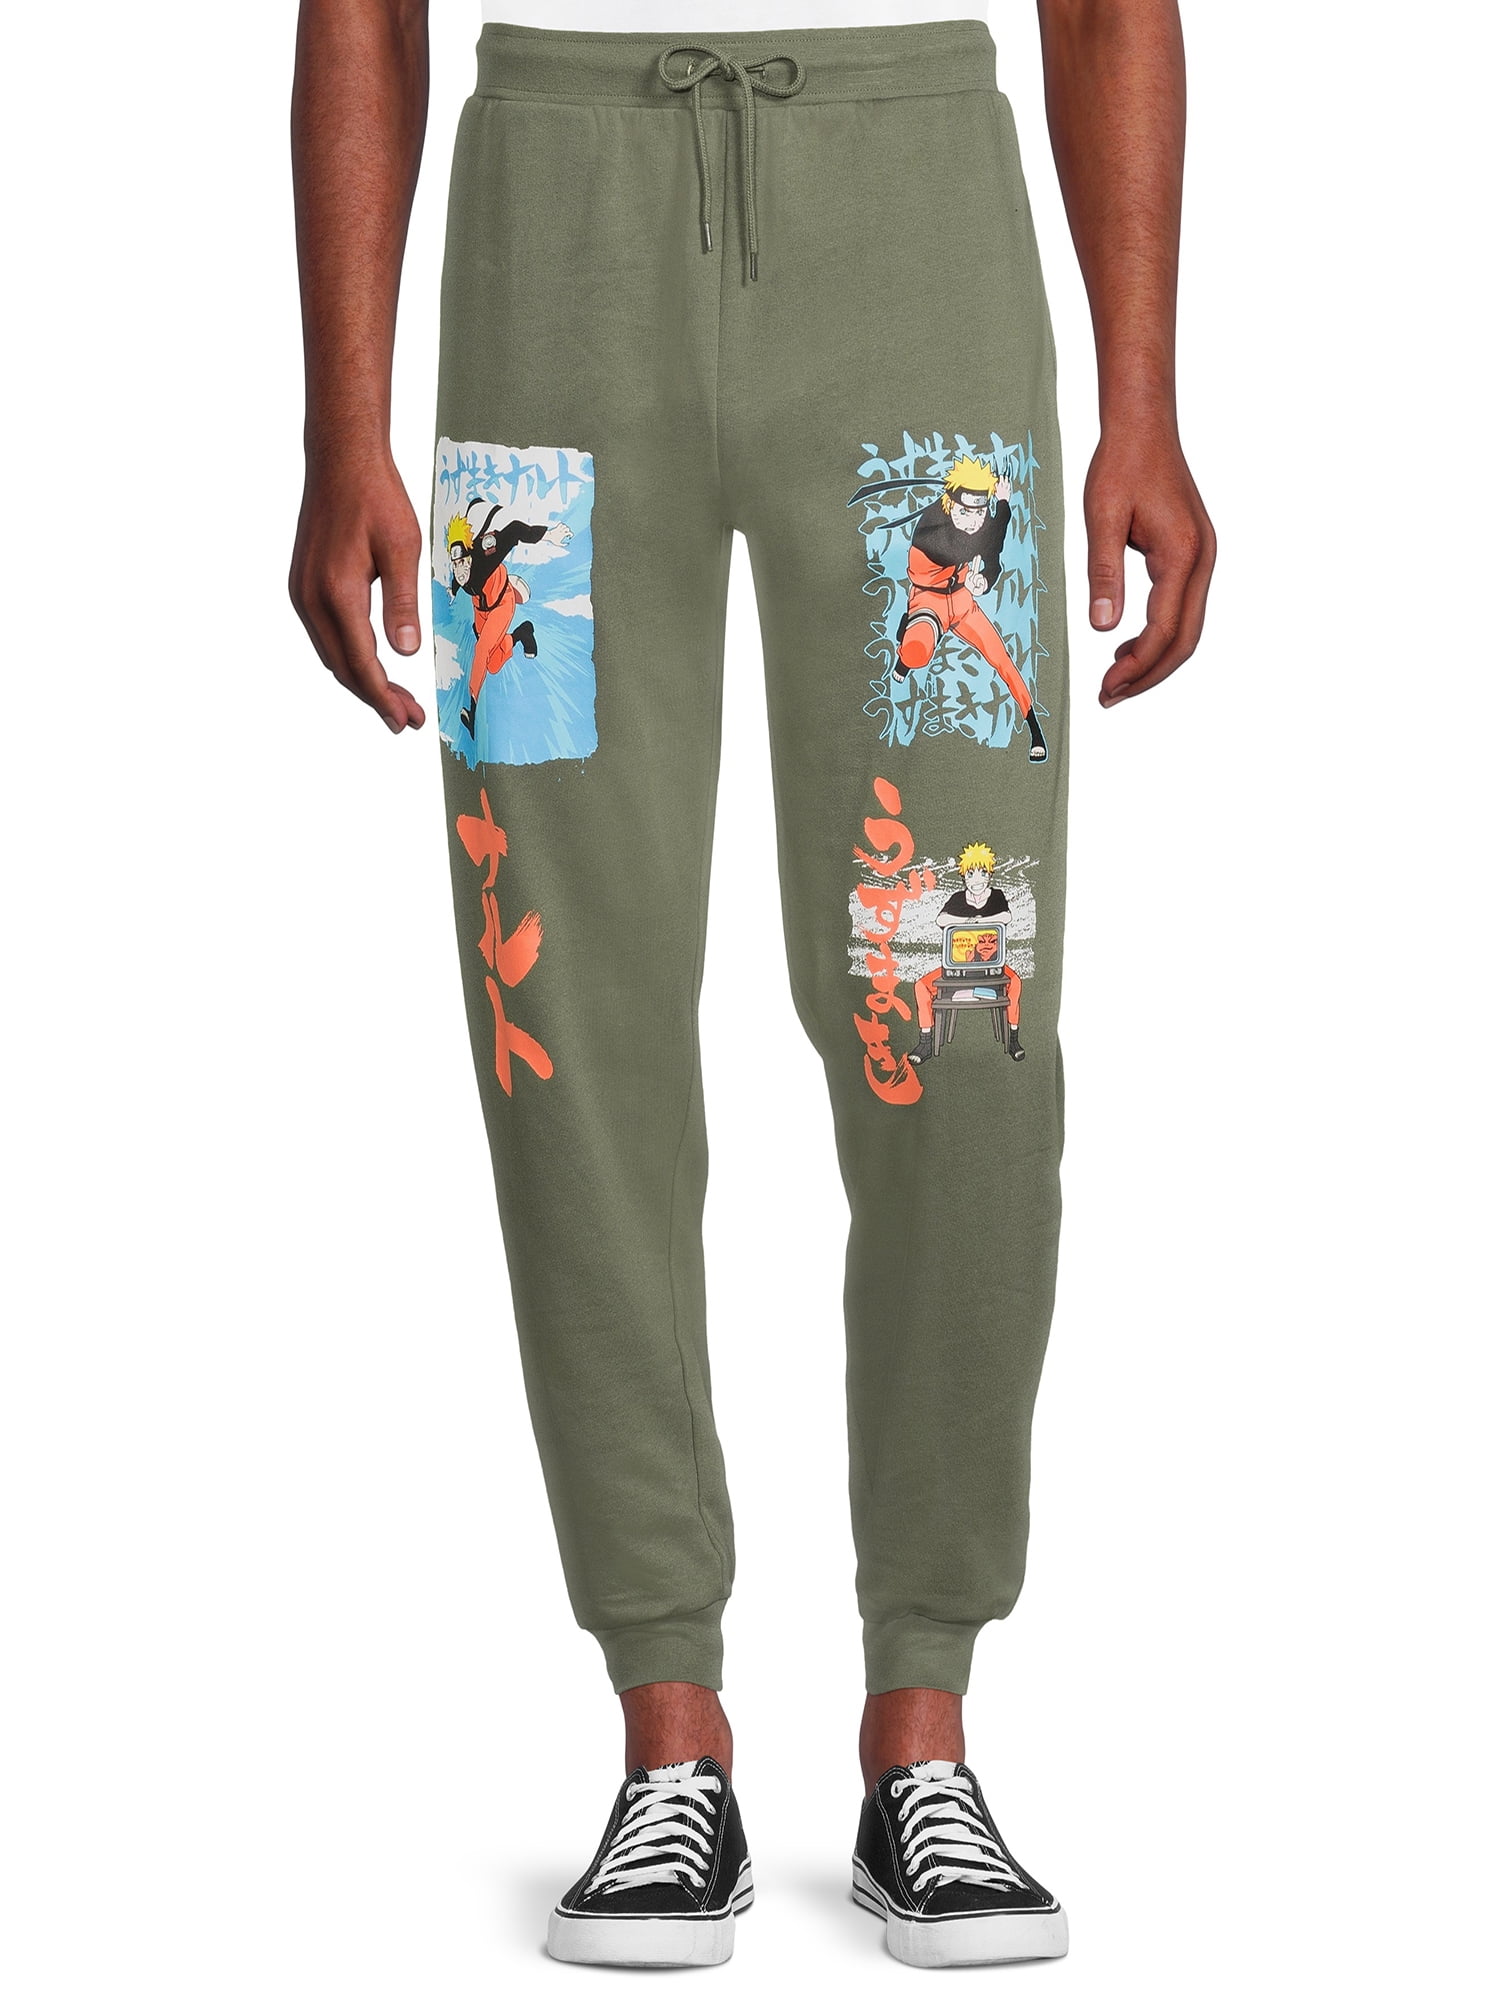 Naruto Shippuden Men's Graphic Jogger Pants - Walmart.com